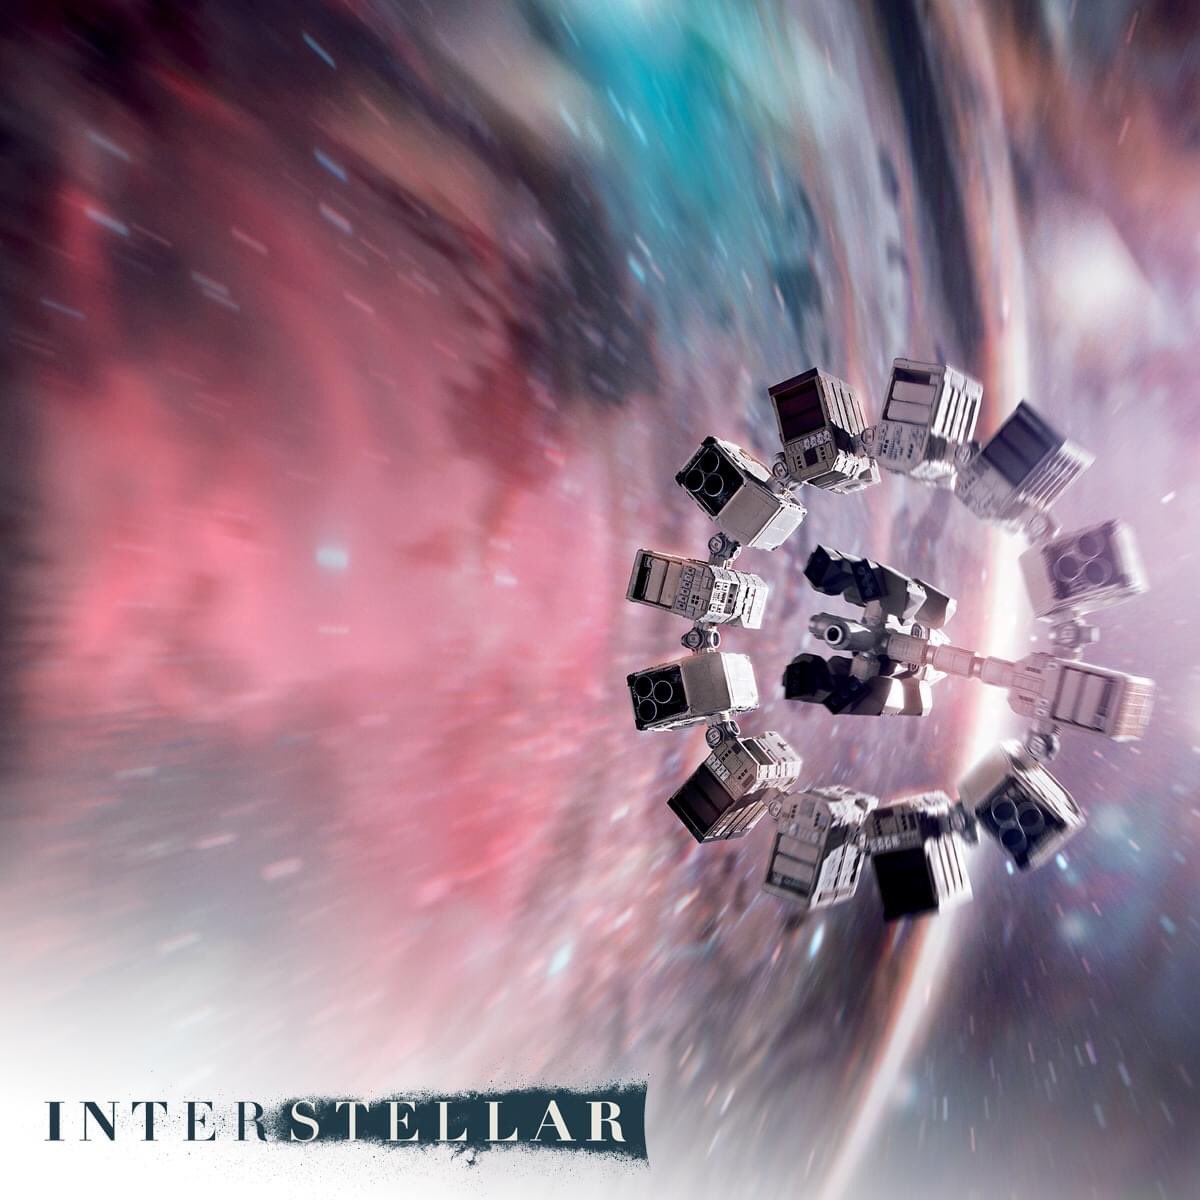 Interstellar on Twitter "Is mankind's new home beyond the stars? Watch